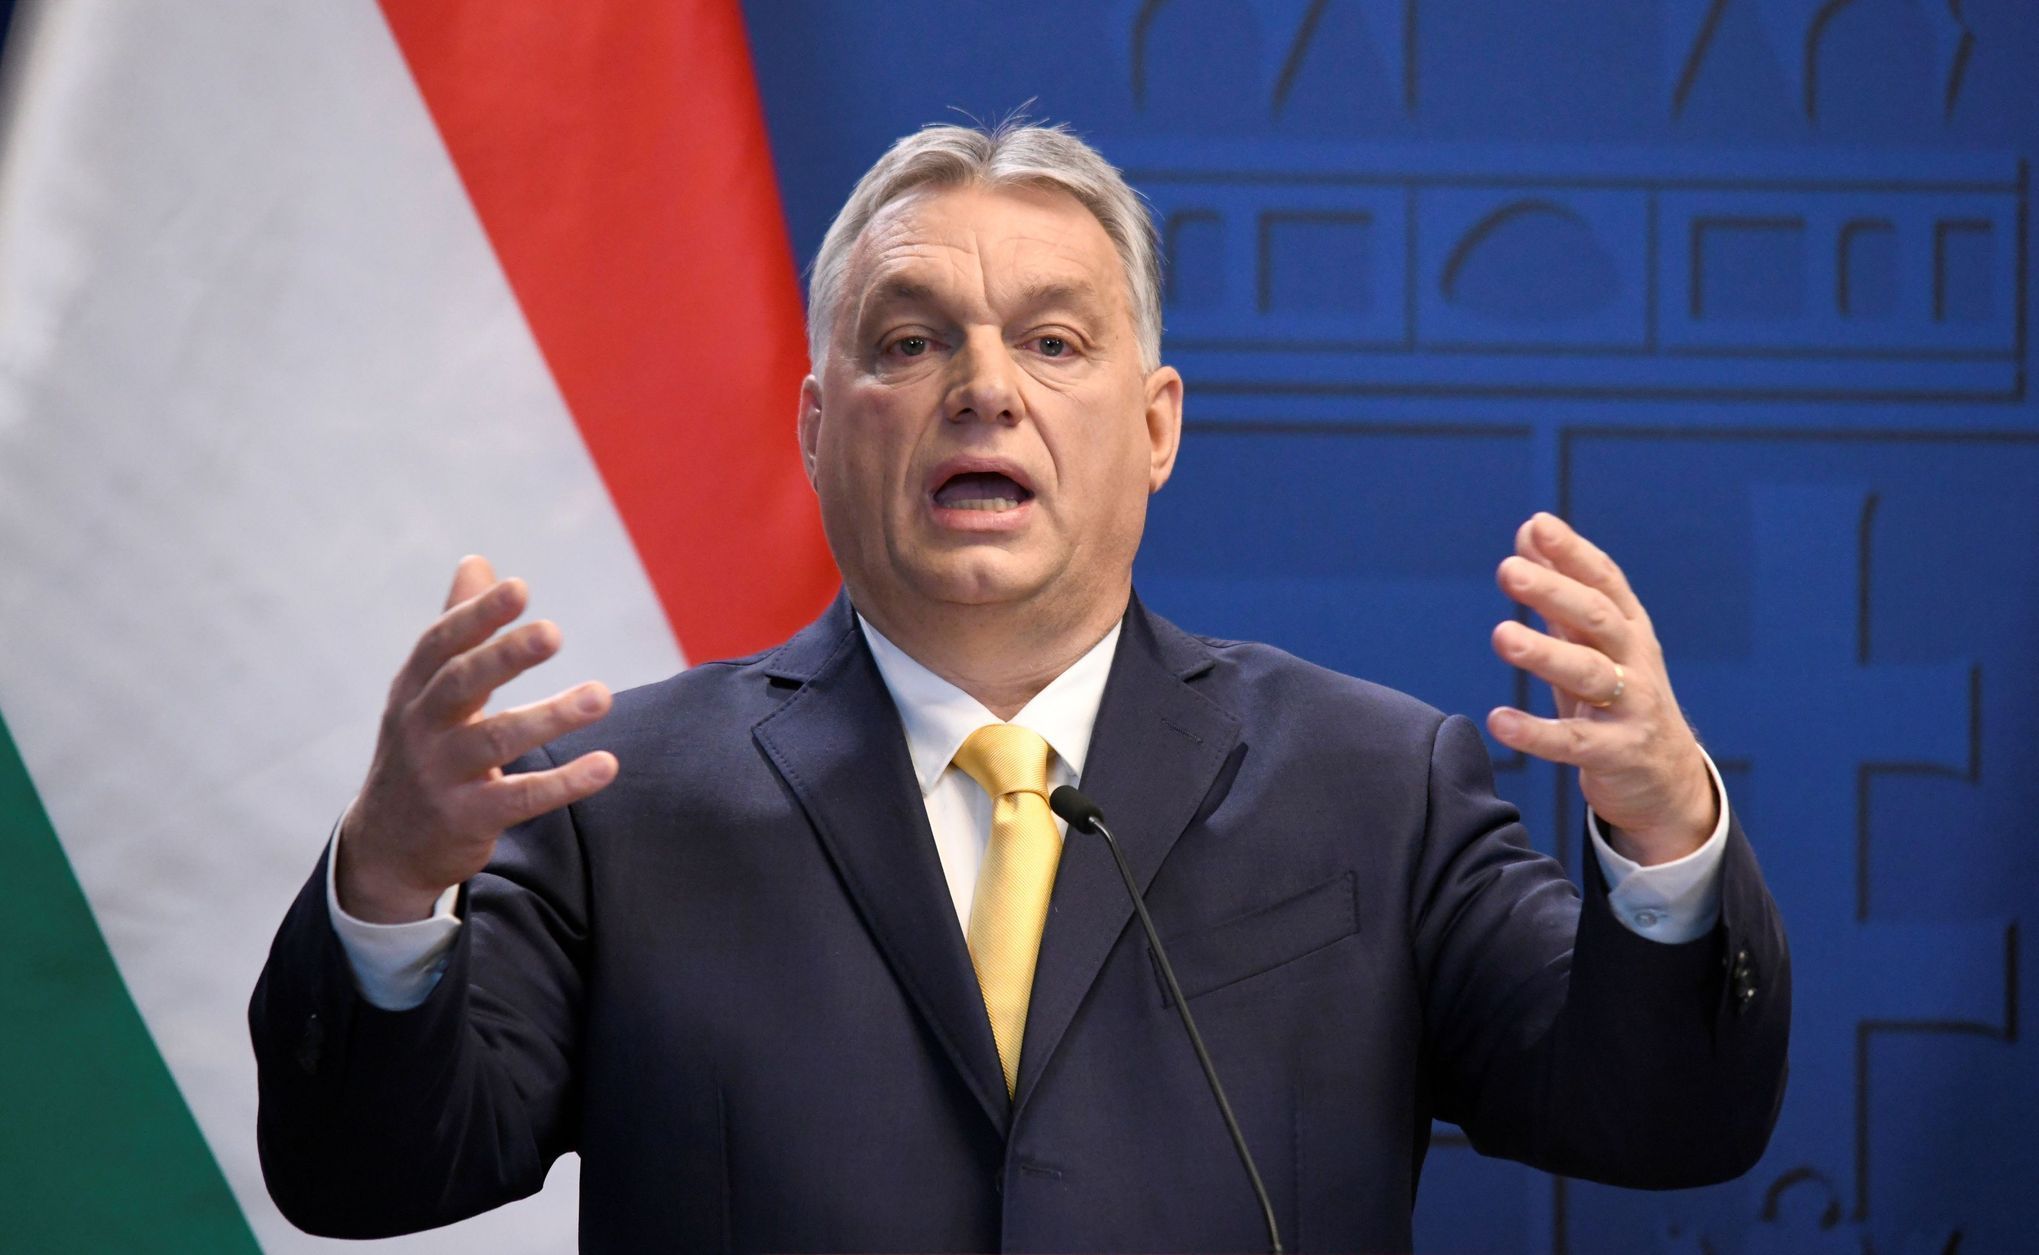 maďarsko; orbán viktor; premiér; fidesz